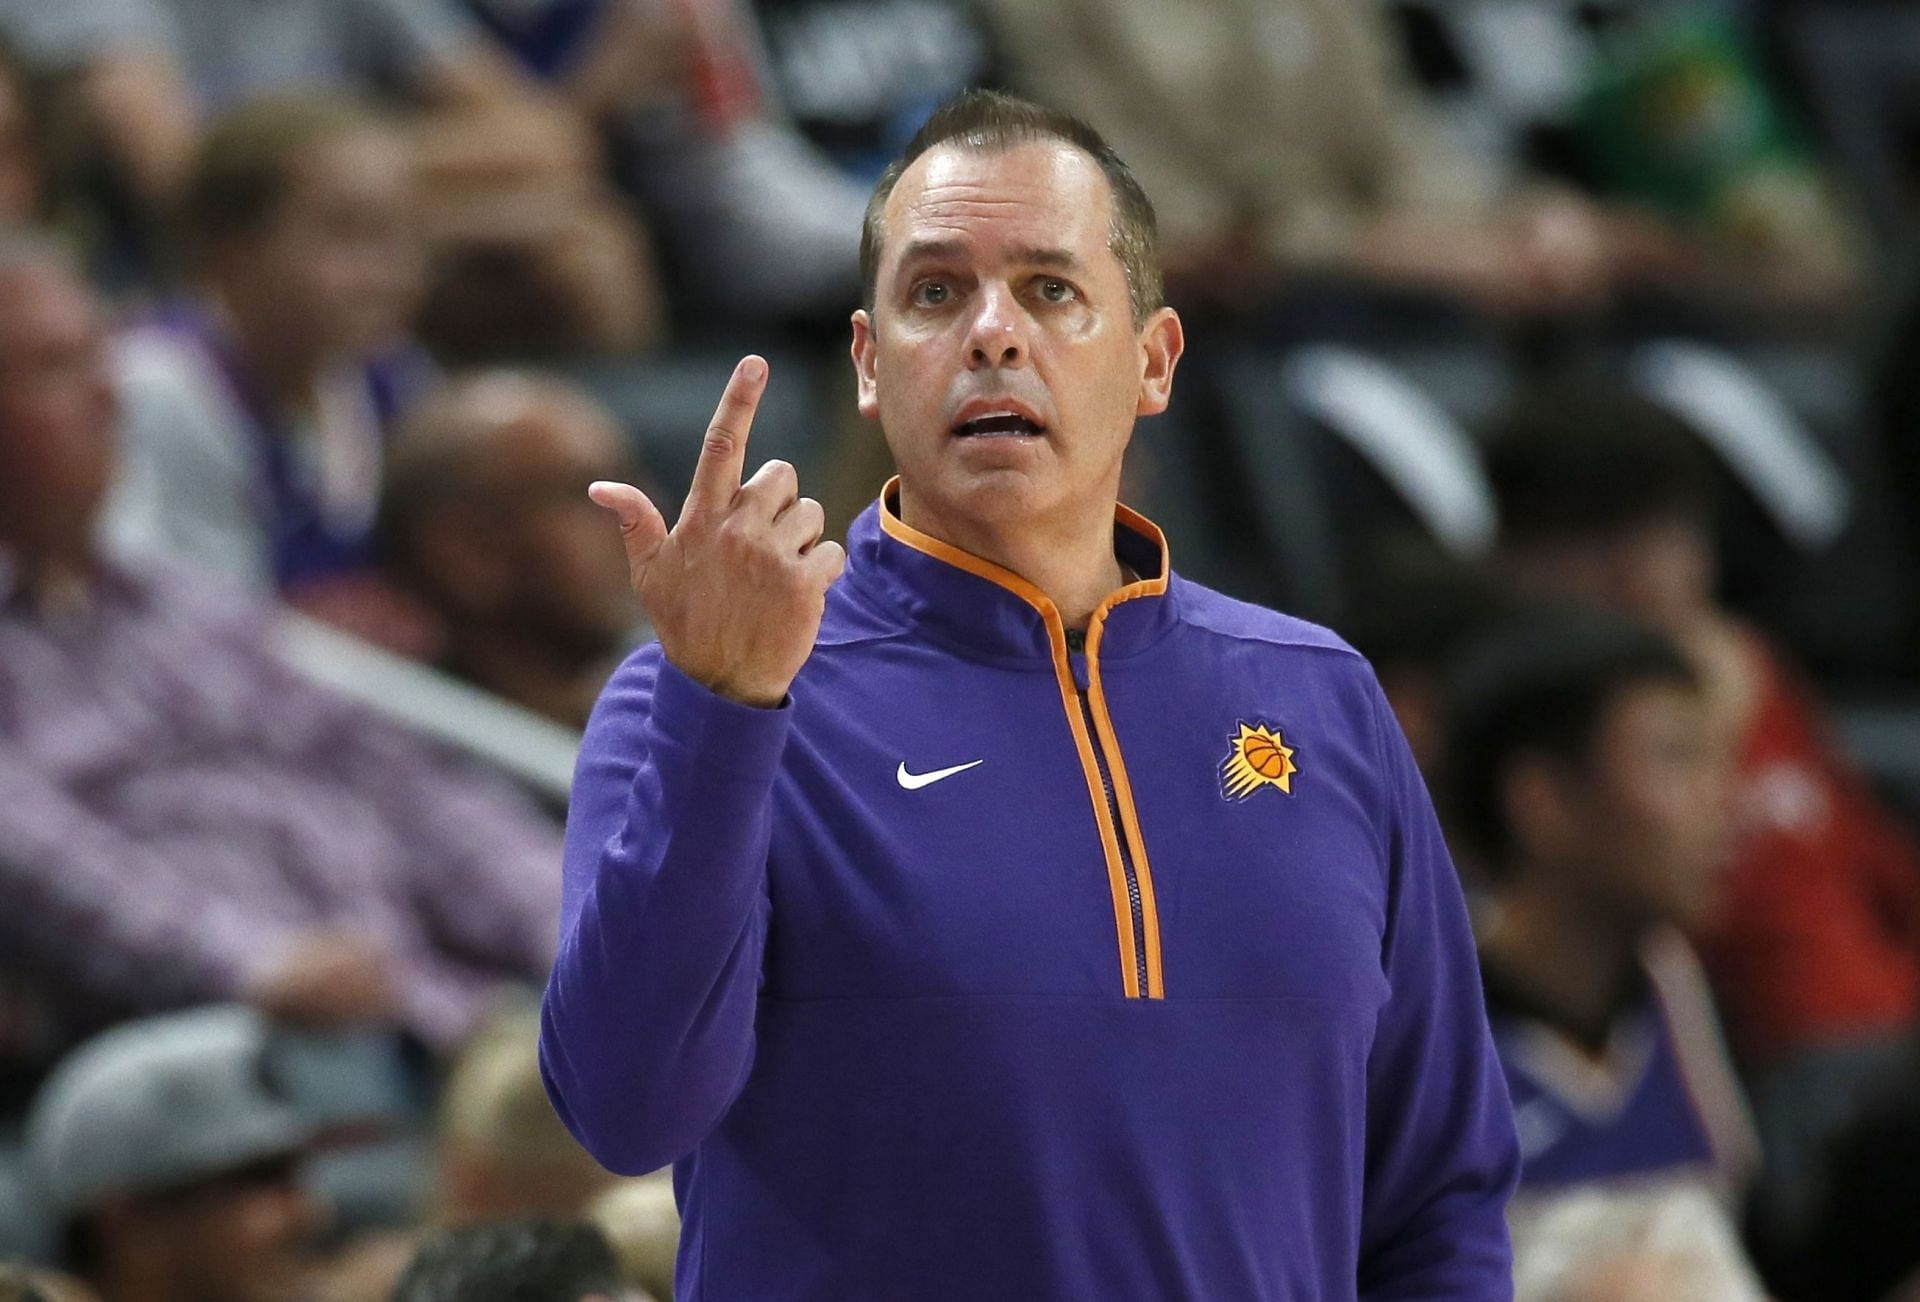 Phoenix Suns coach Frank Vogel